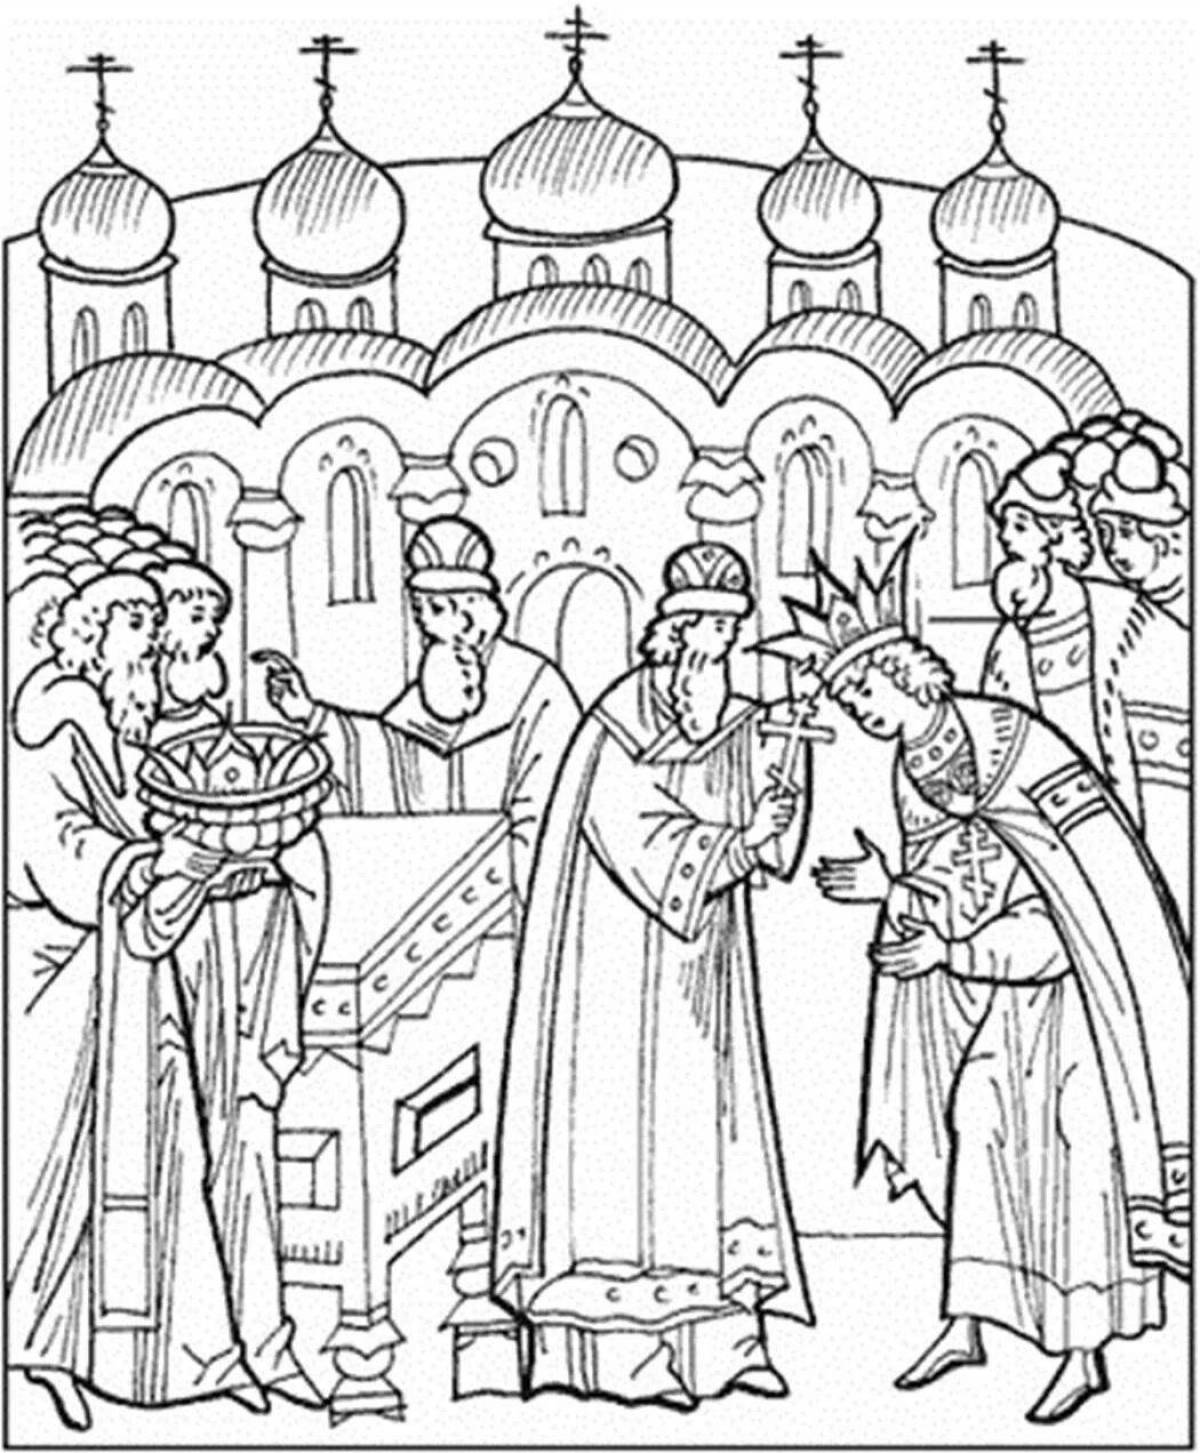 В 1547 году Иван венчался на царство